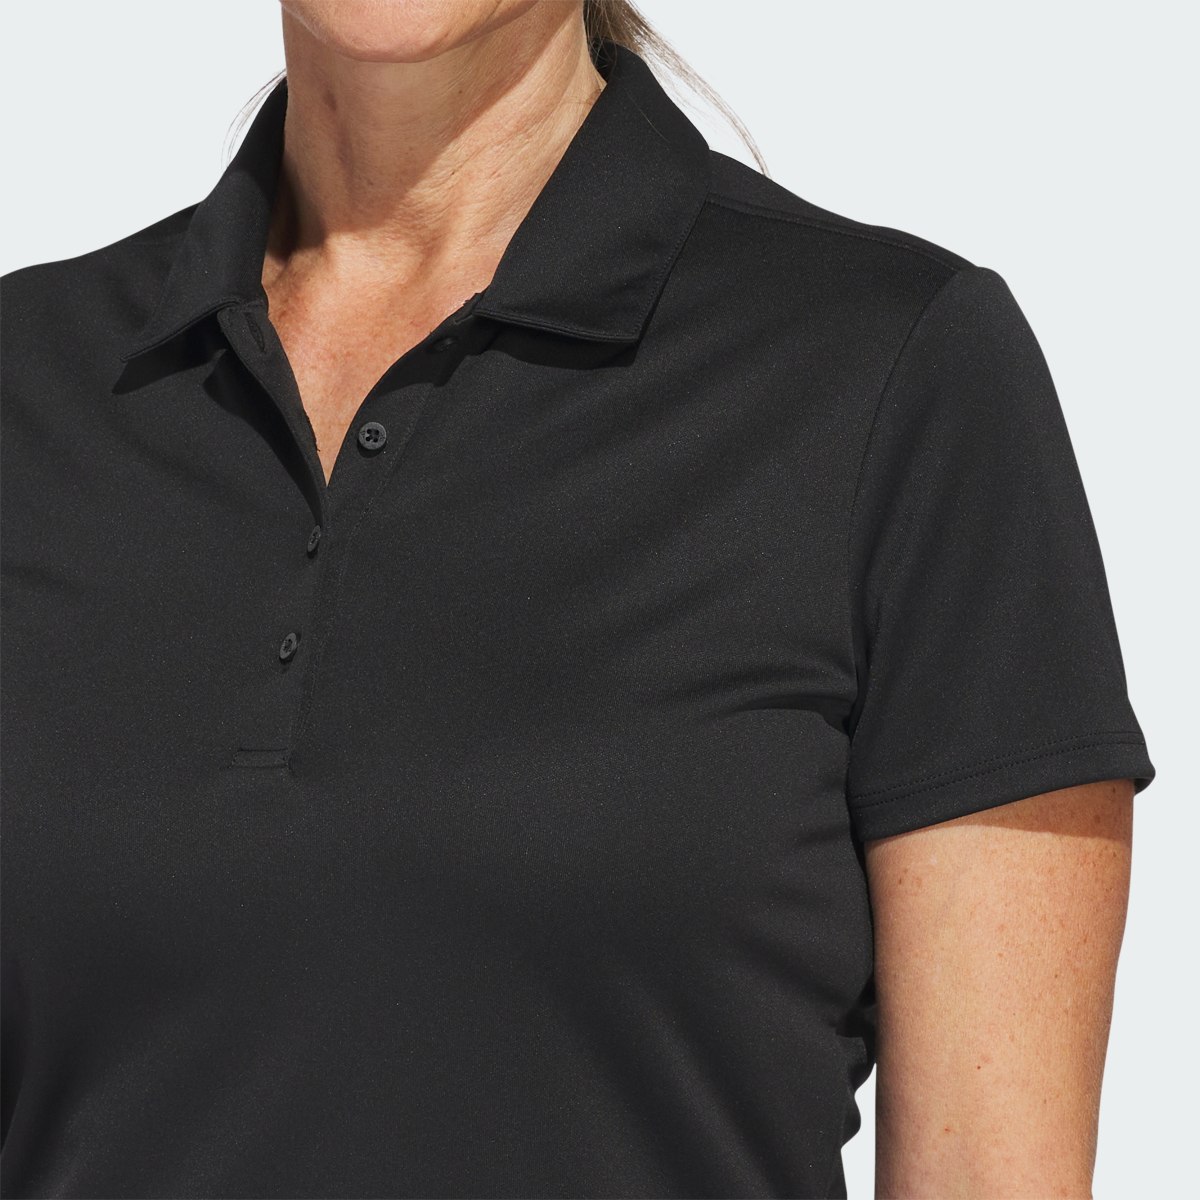 Adidas Koszulka polo Women's Solid Performance Short Sleeve. 6